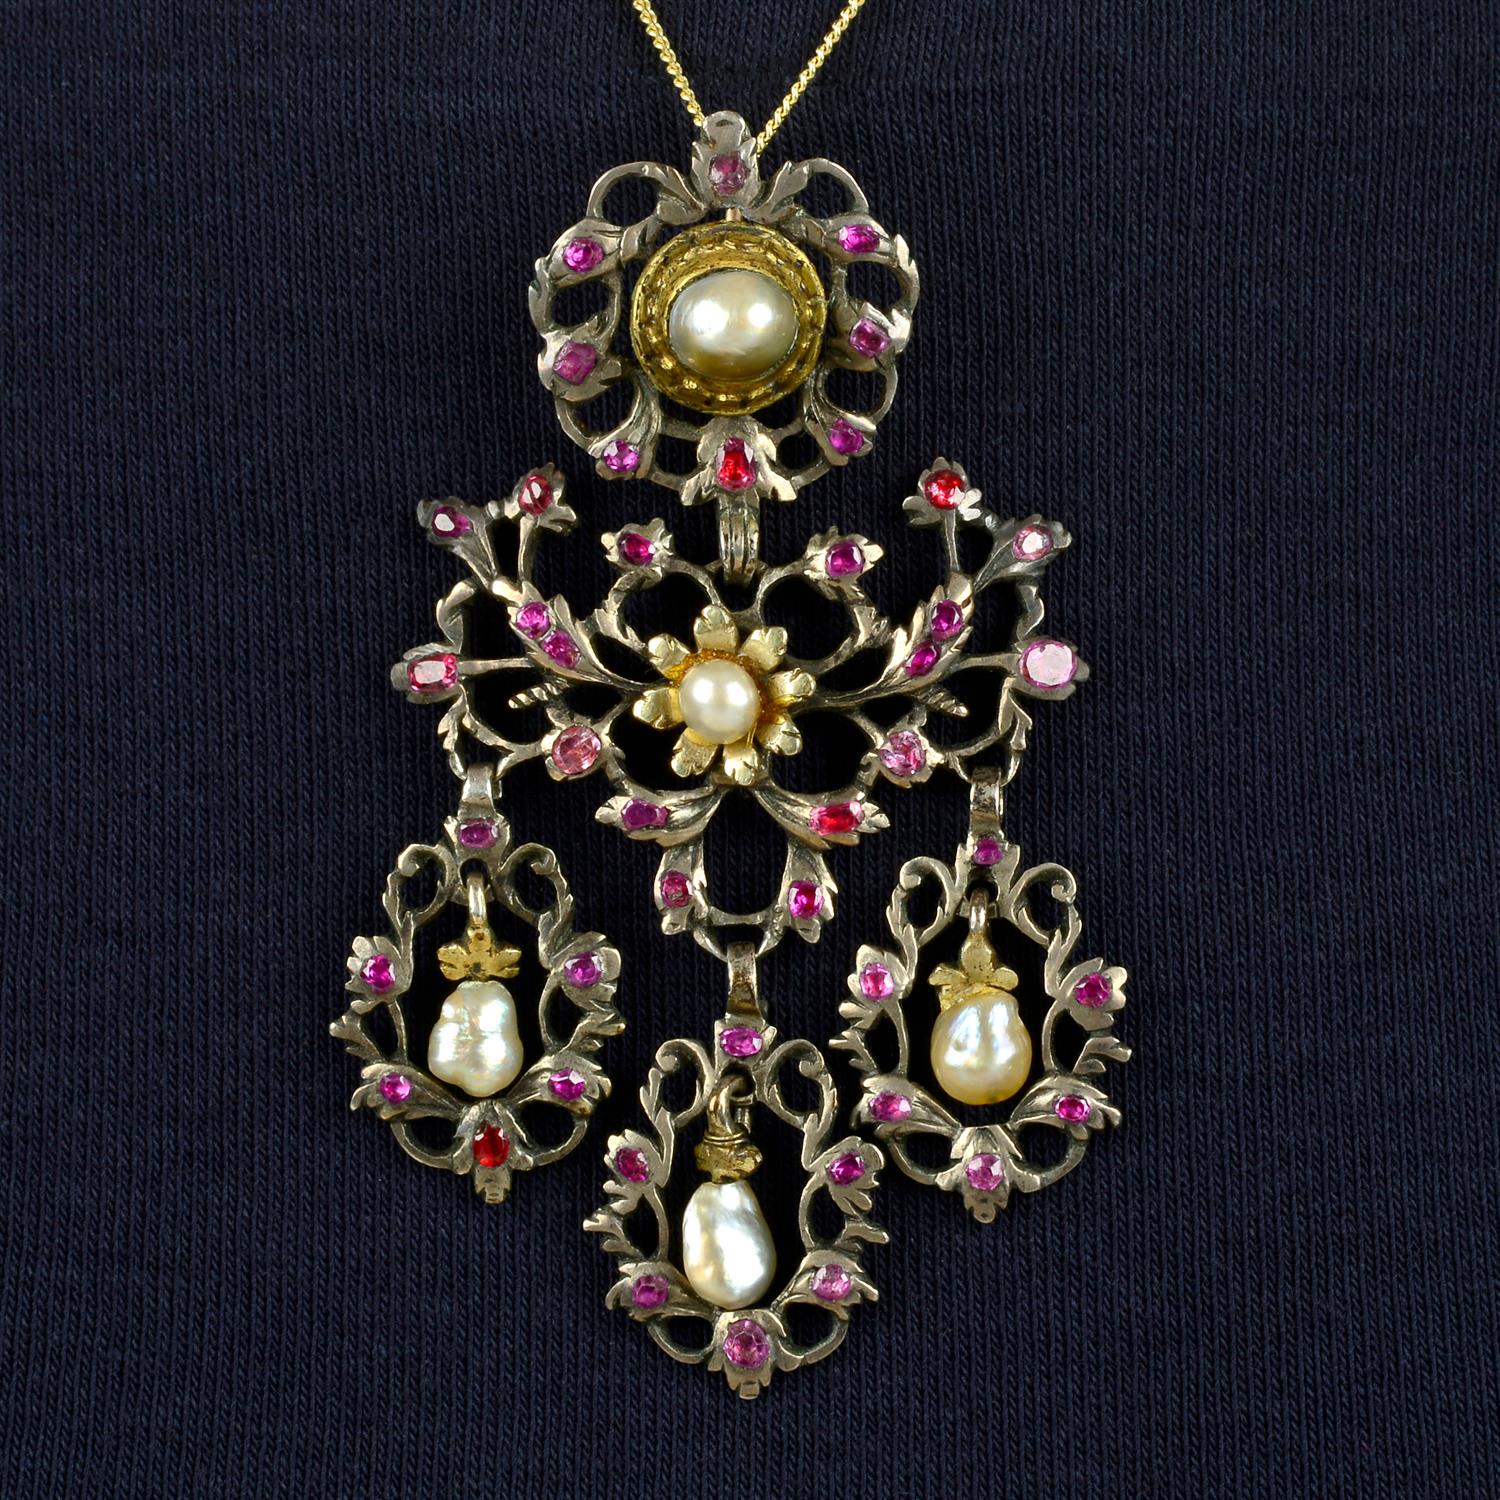 A late 18th century silver and gold pearl, foil back ruby girandole pendant.